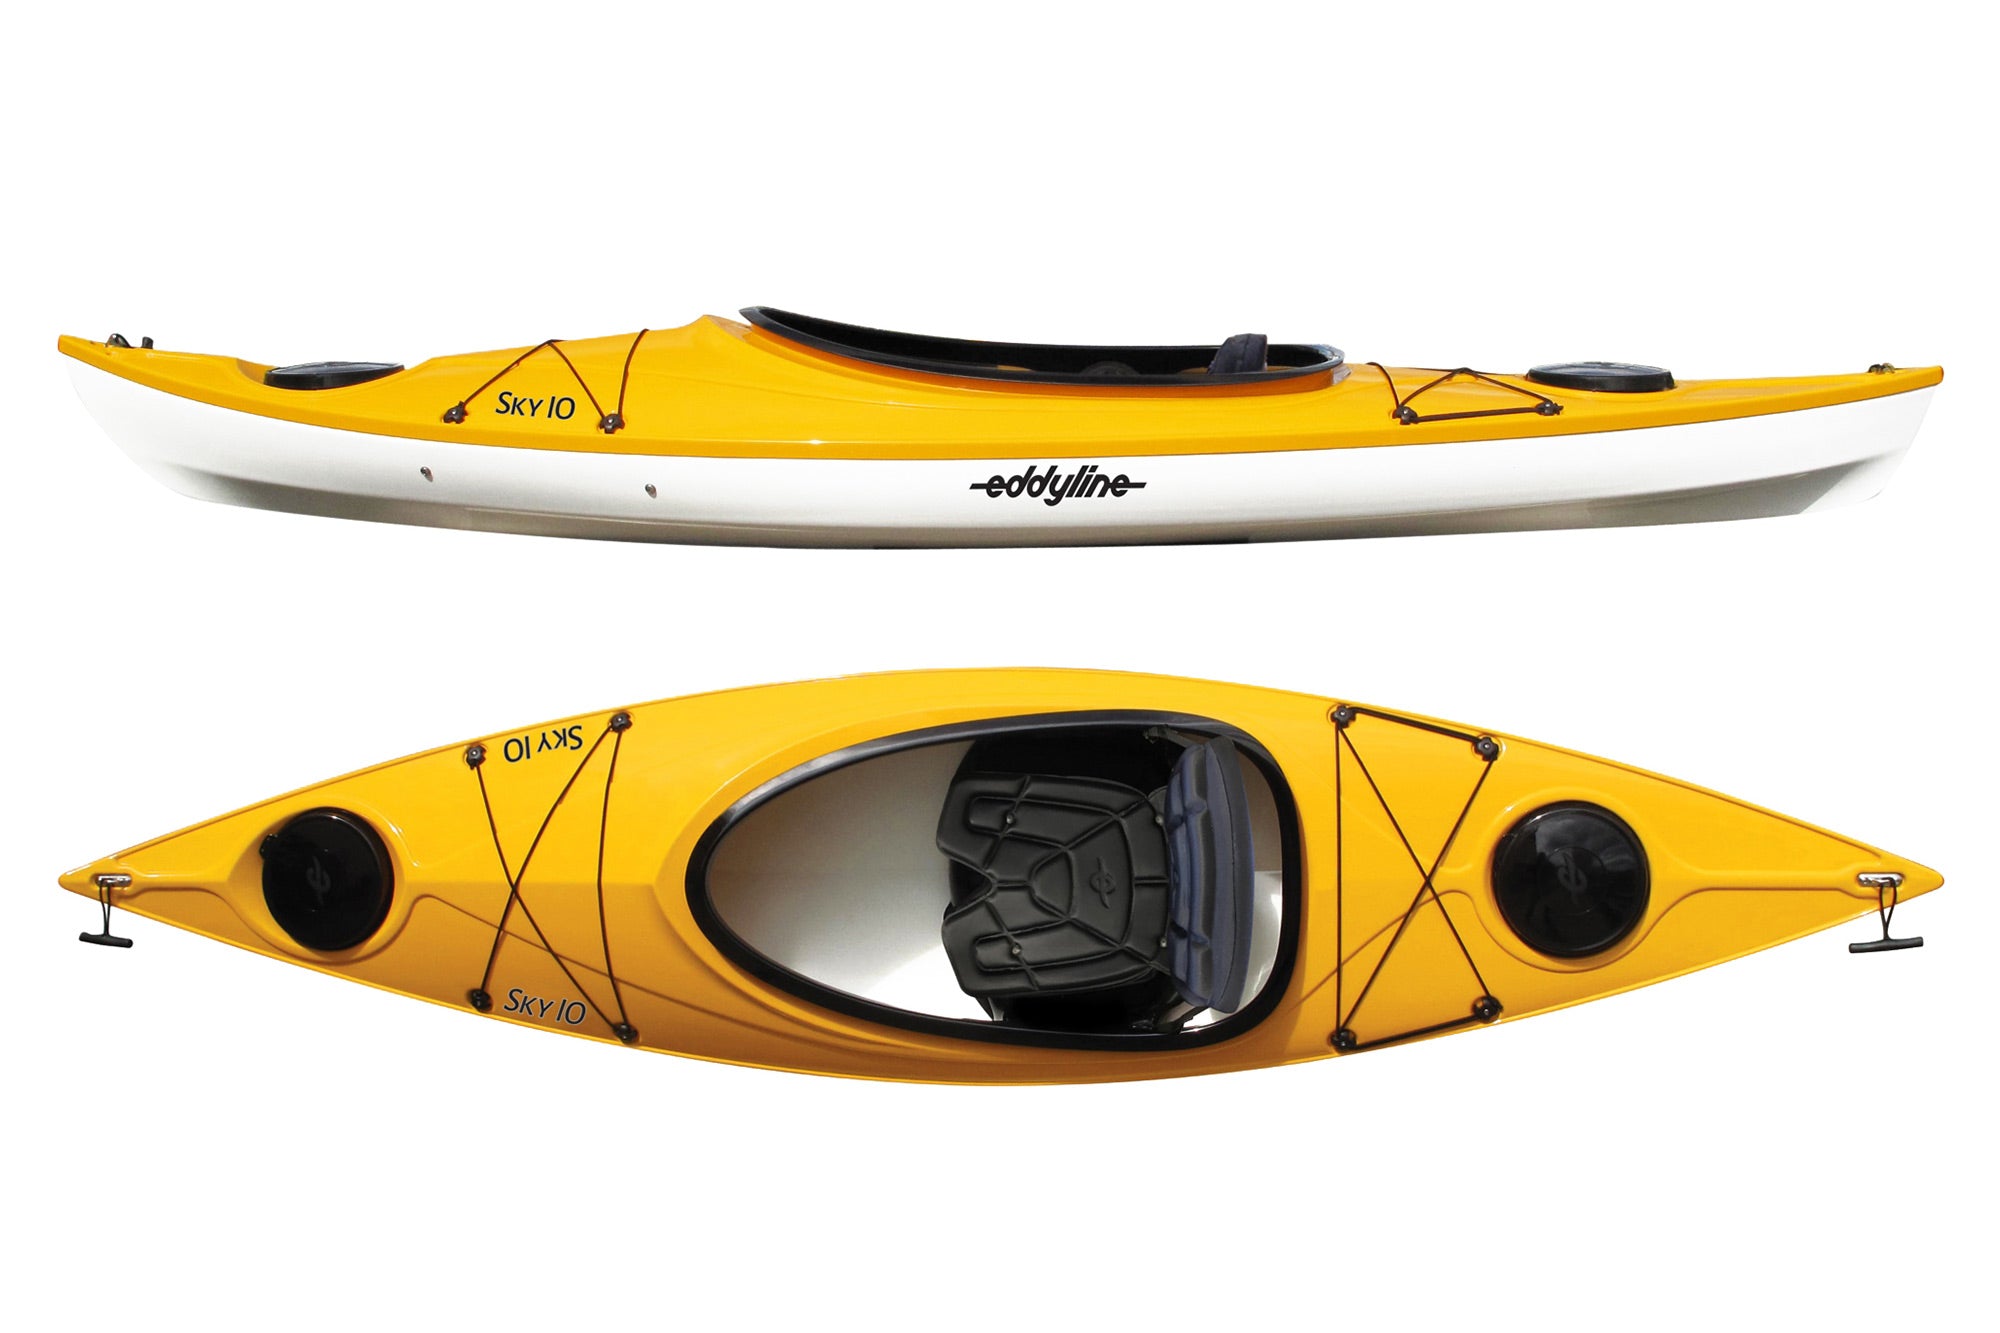 space coast for sale kayak - craigslist